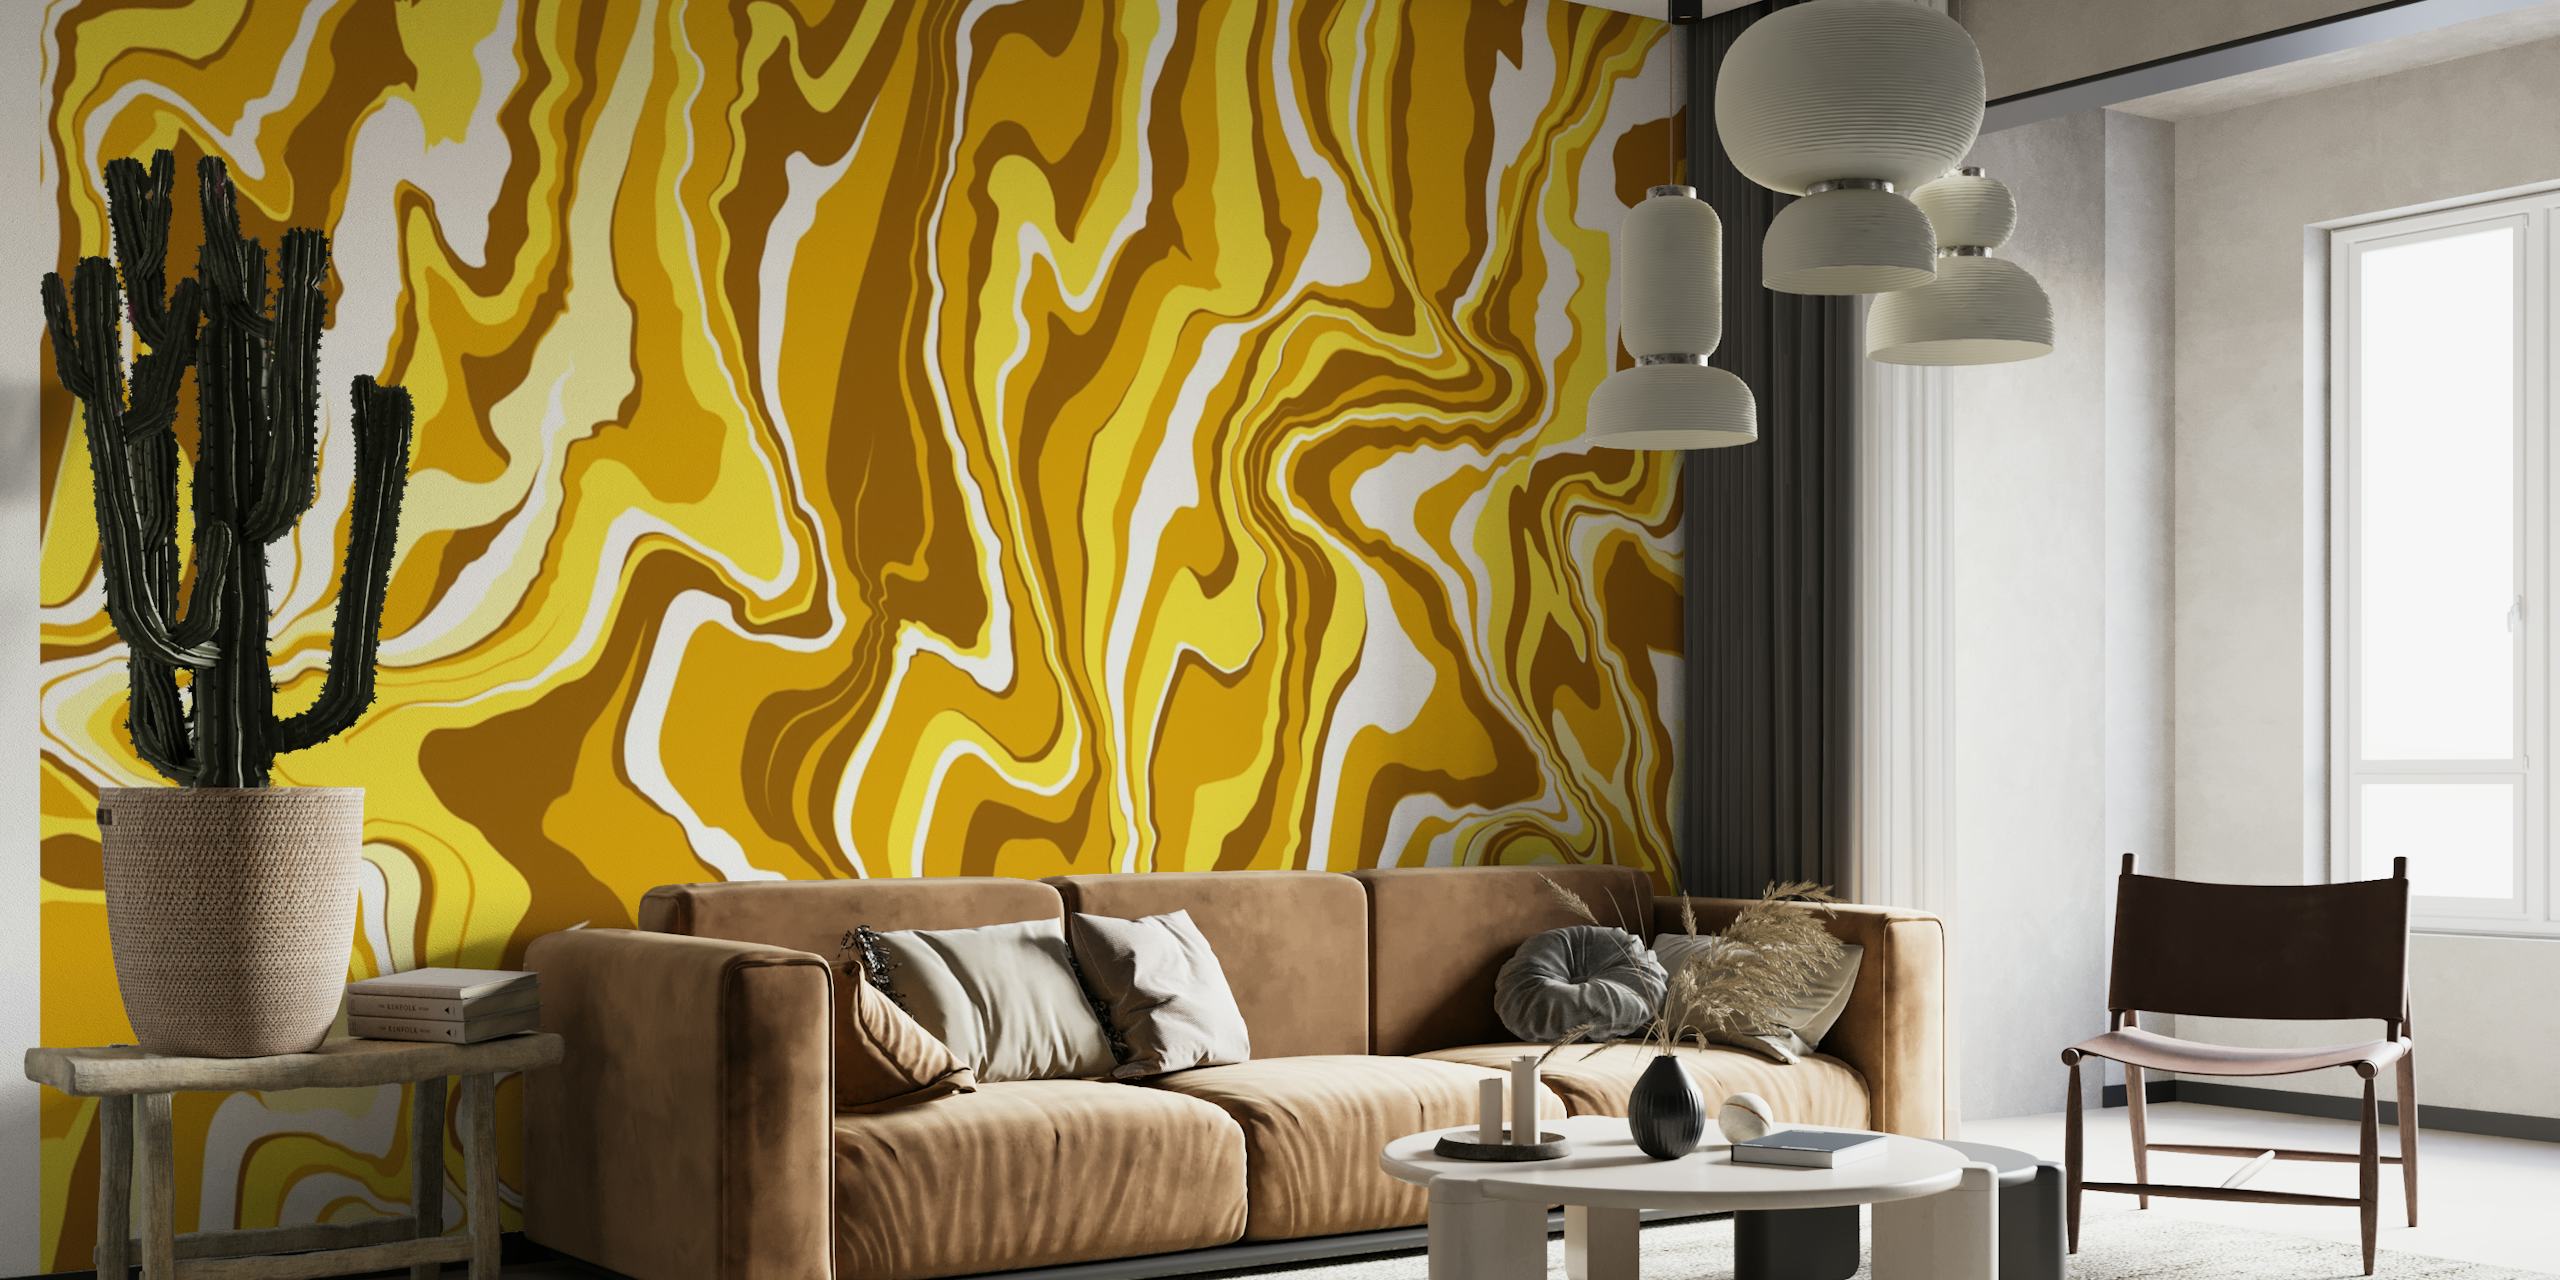 Fluid Art 4 vægmaleri med gyldne hvirvler og flydende abstrakt design